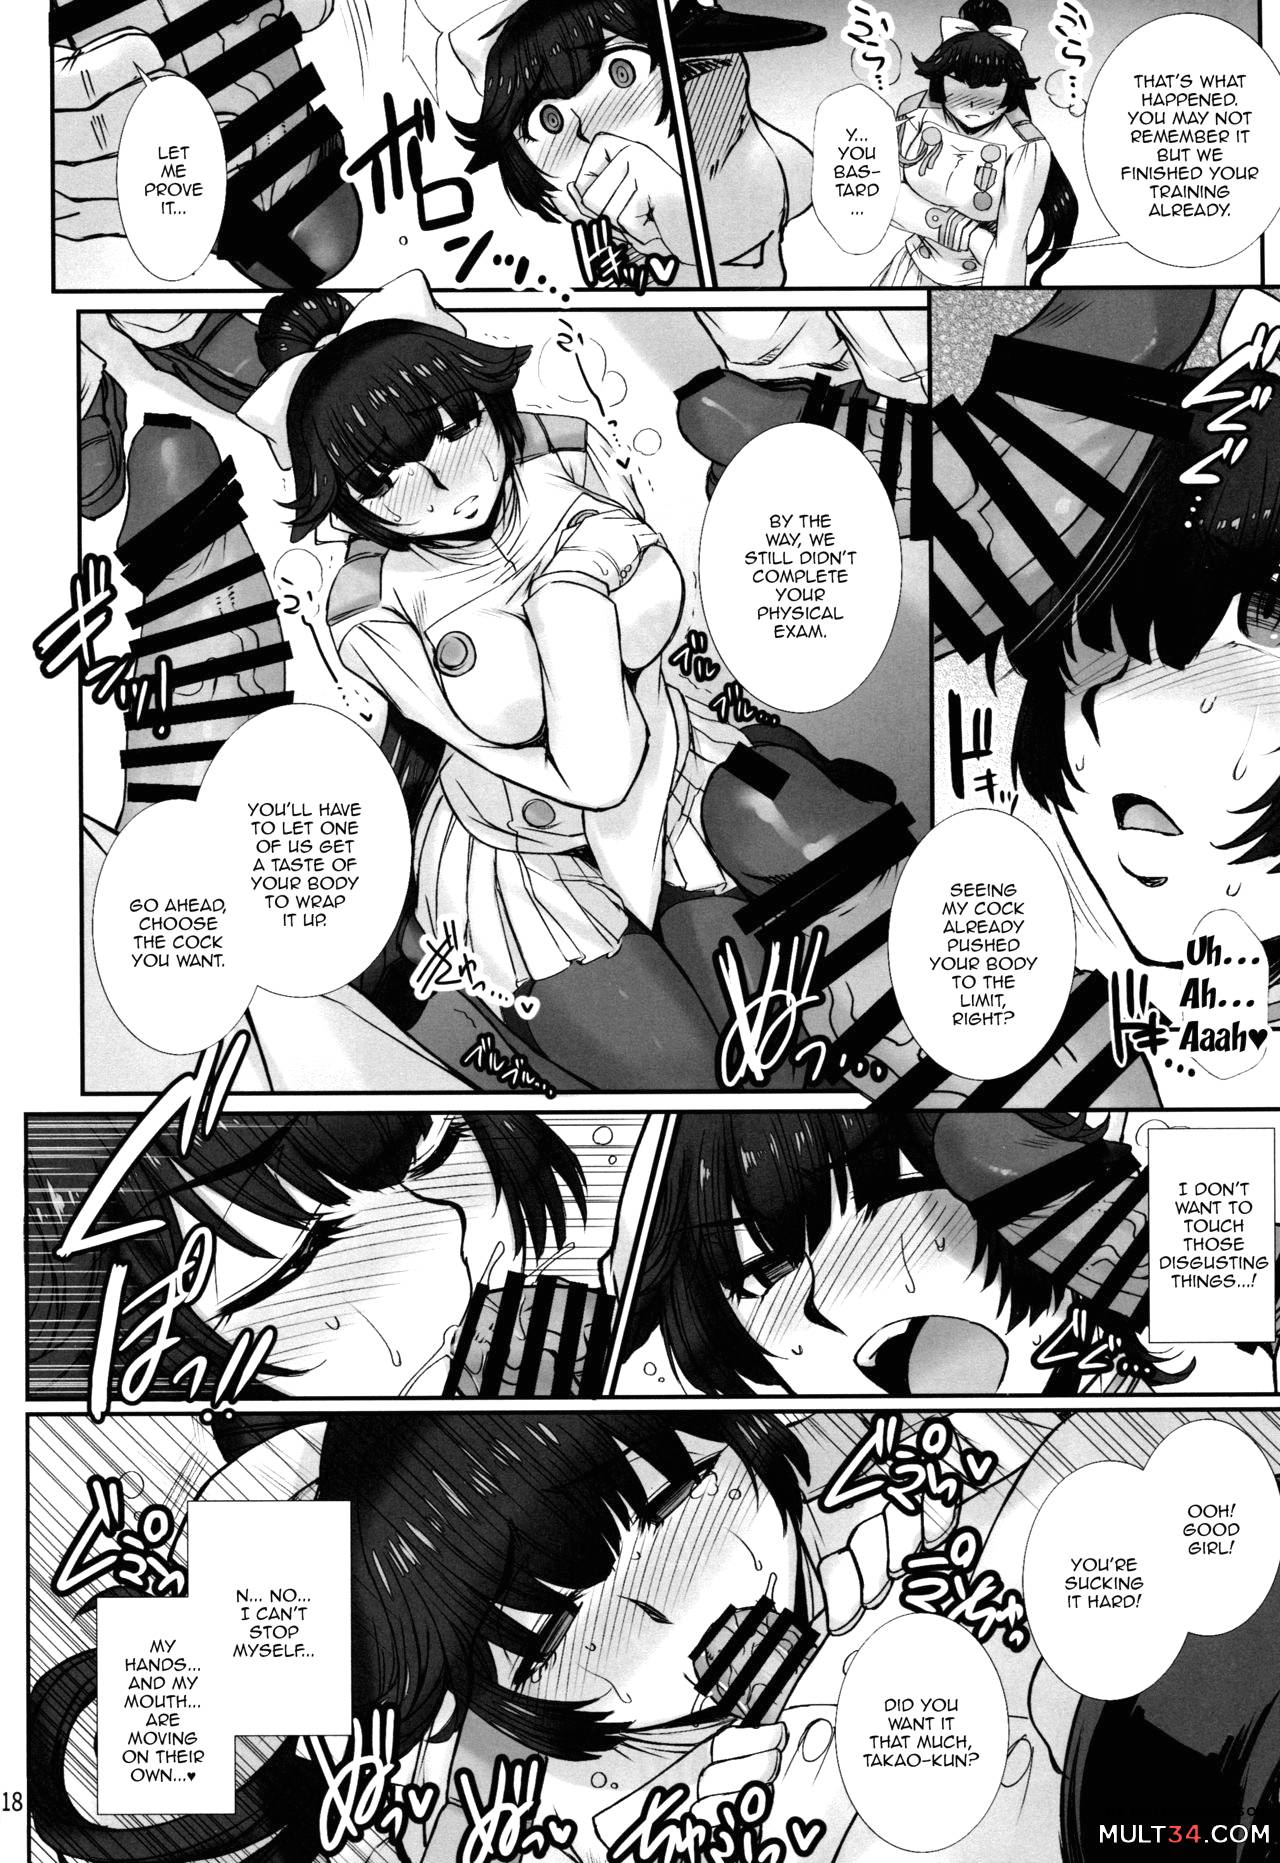 Takao's Dirty Cries page 17